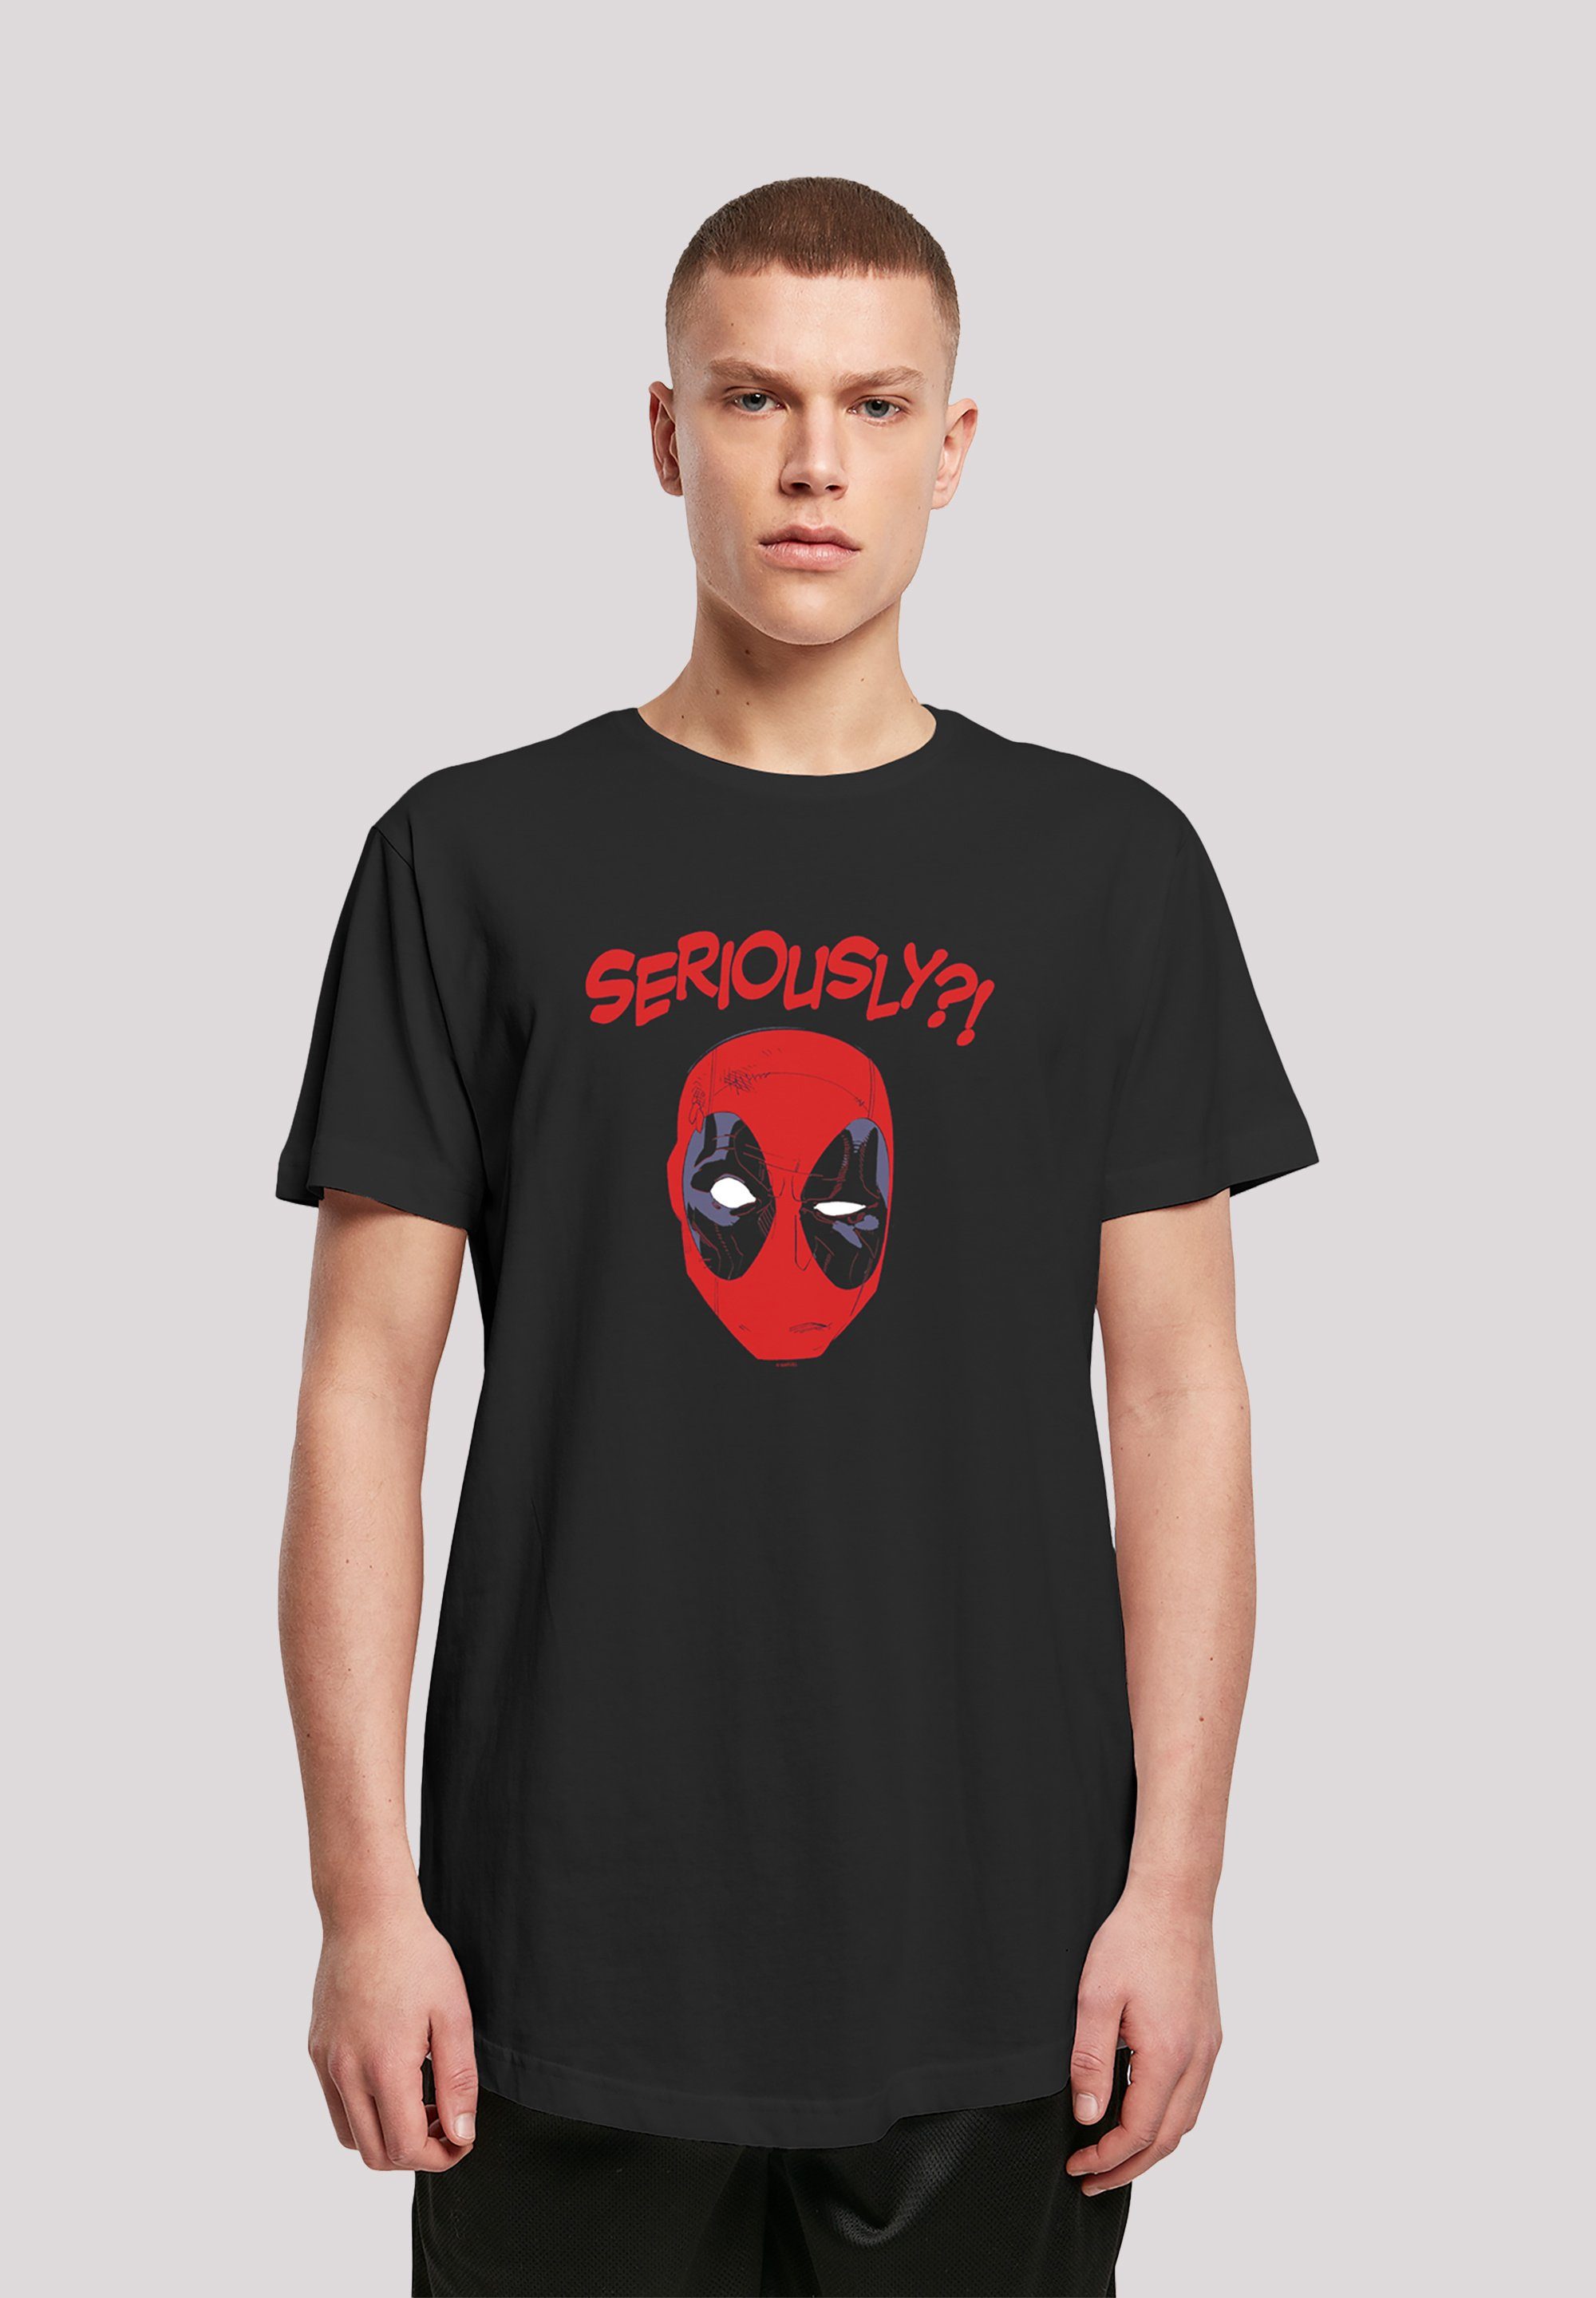 T-Shirt Marvel Deadpool Print F4NT4STIC Seriously